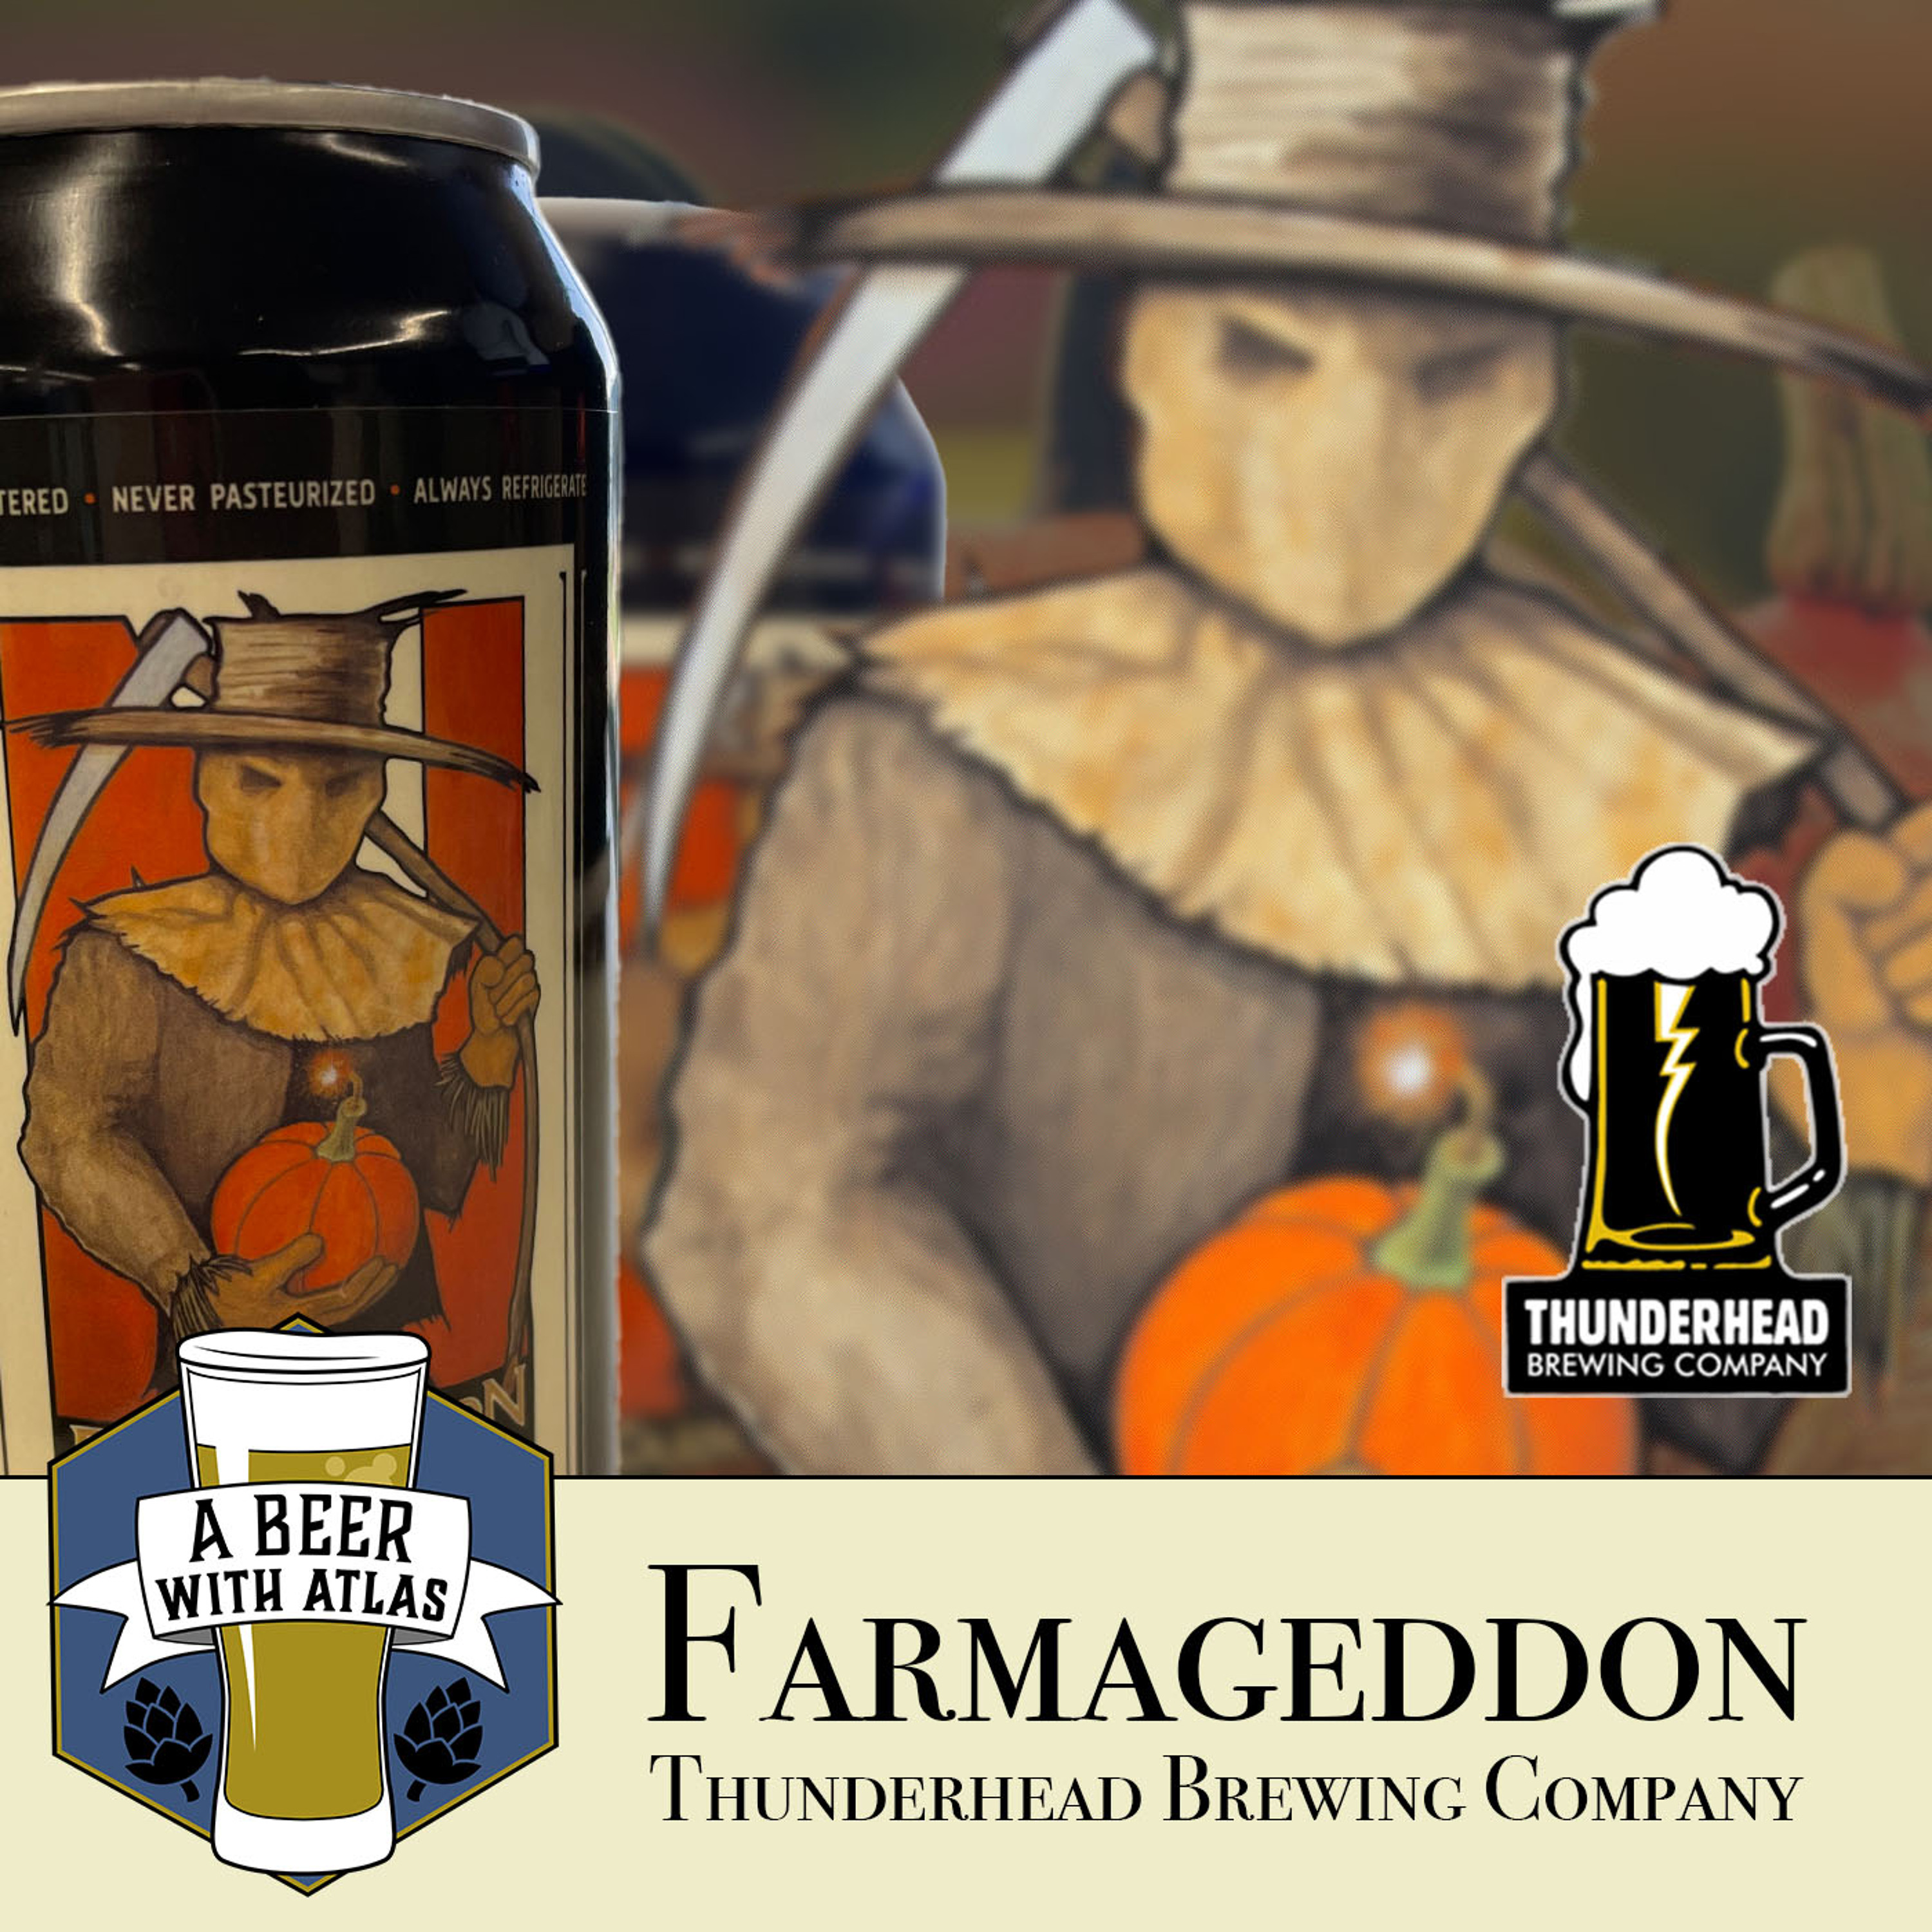 Farmageddon Spiced Pumpkin Ale by Thunderhead Brewing Company - A Beer with Atlas 216